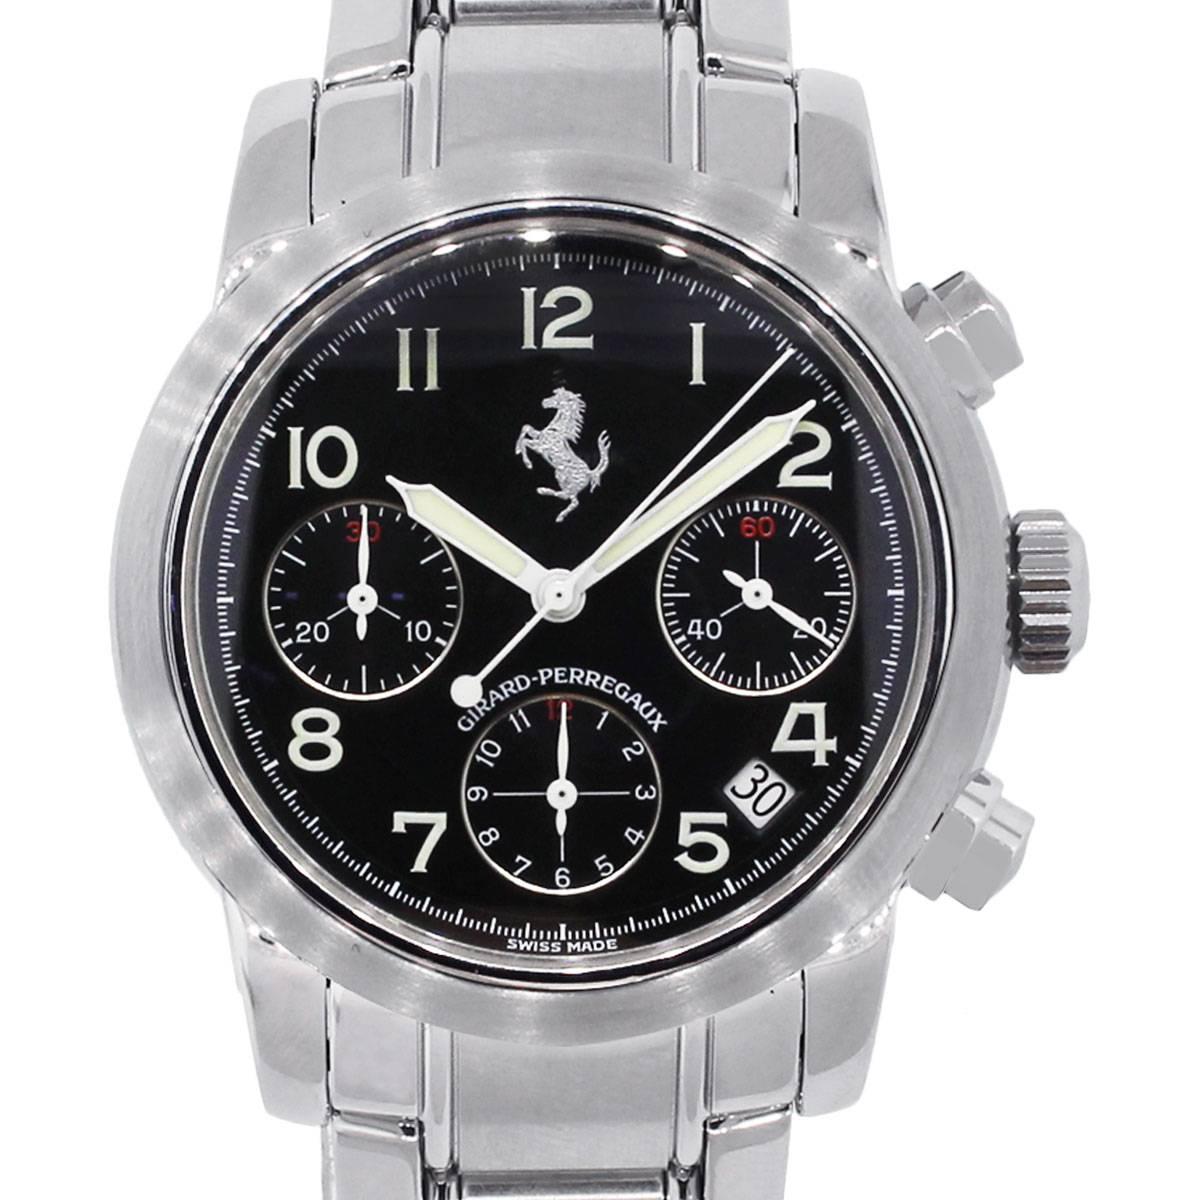 Girard Perregaux Stainless Steel Ferrari Chronograph Automatic Wristwatch